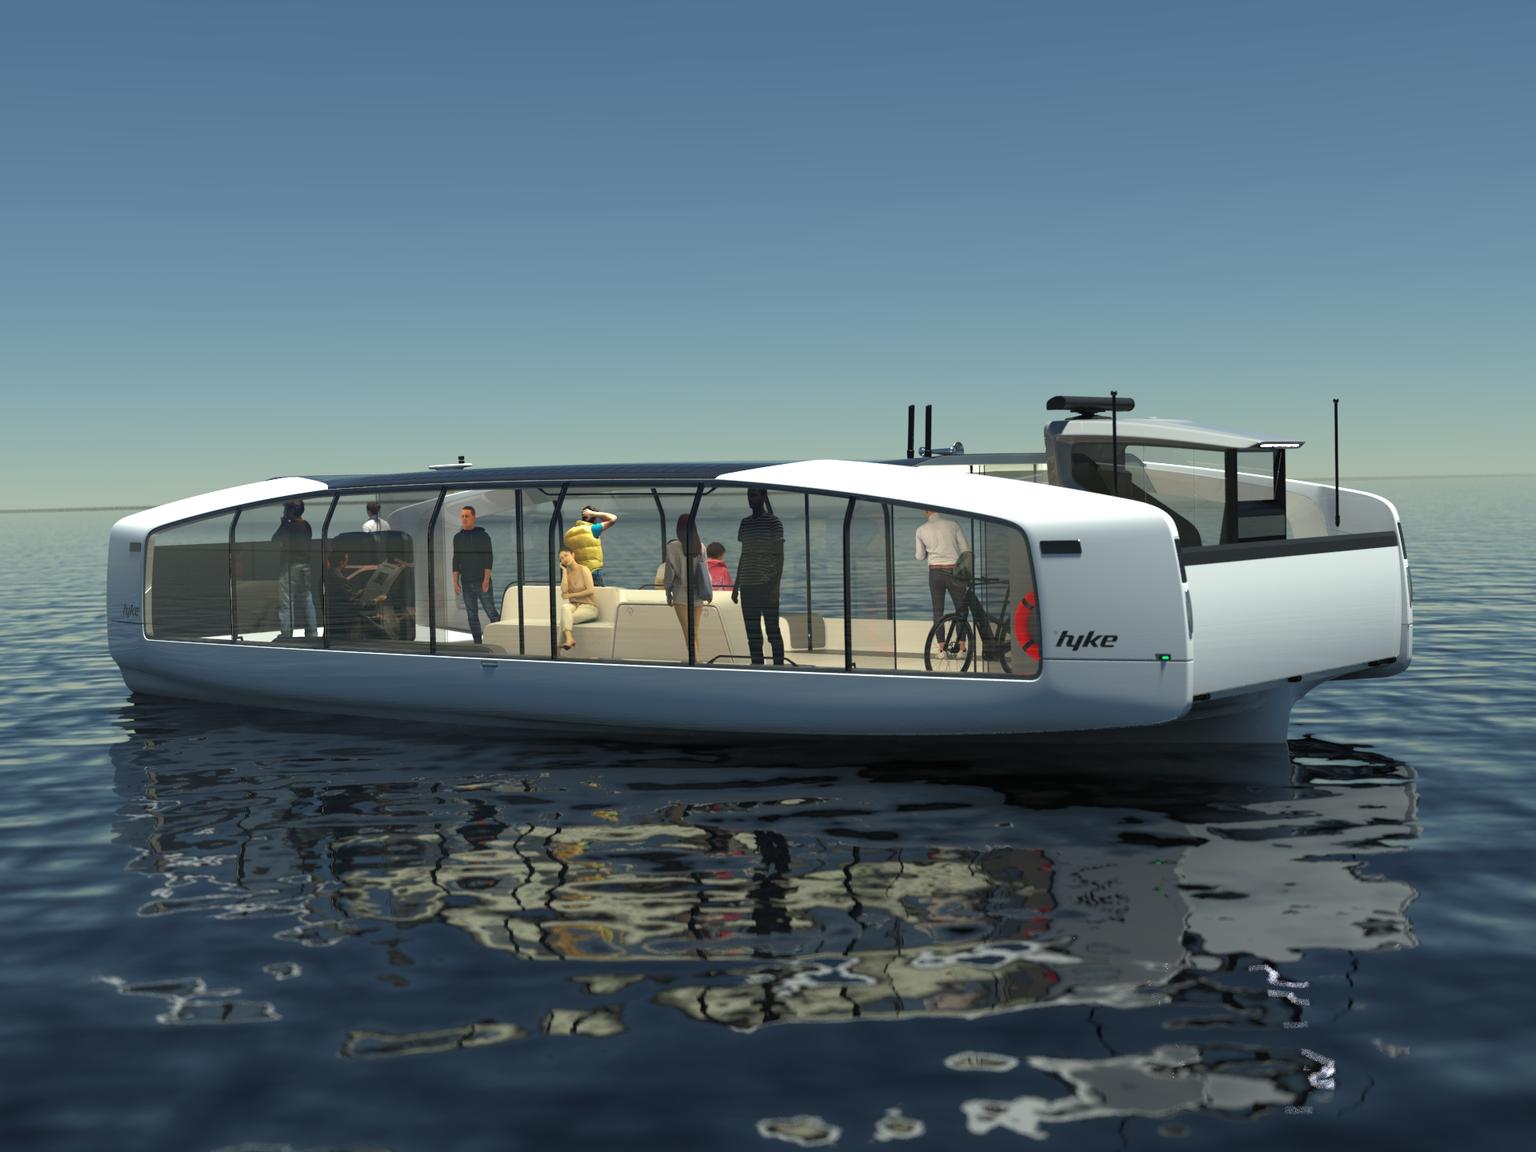 Hyke zero-emission ferry effectively transporting passengers